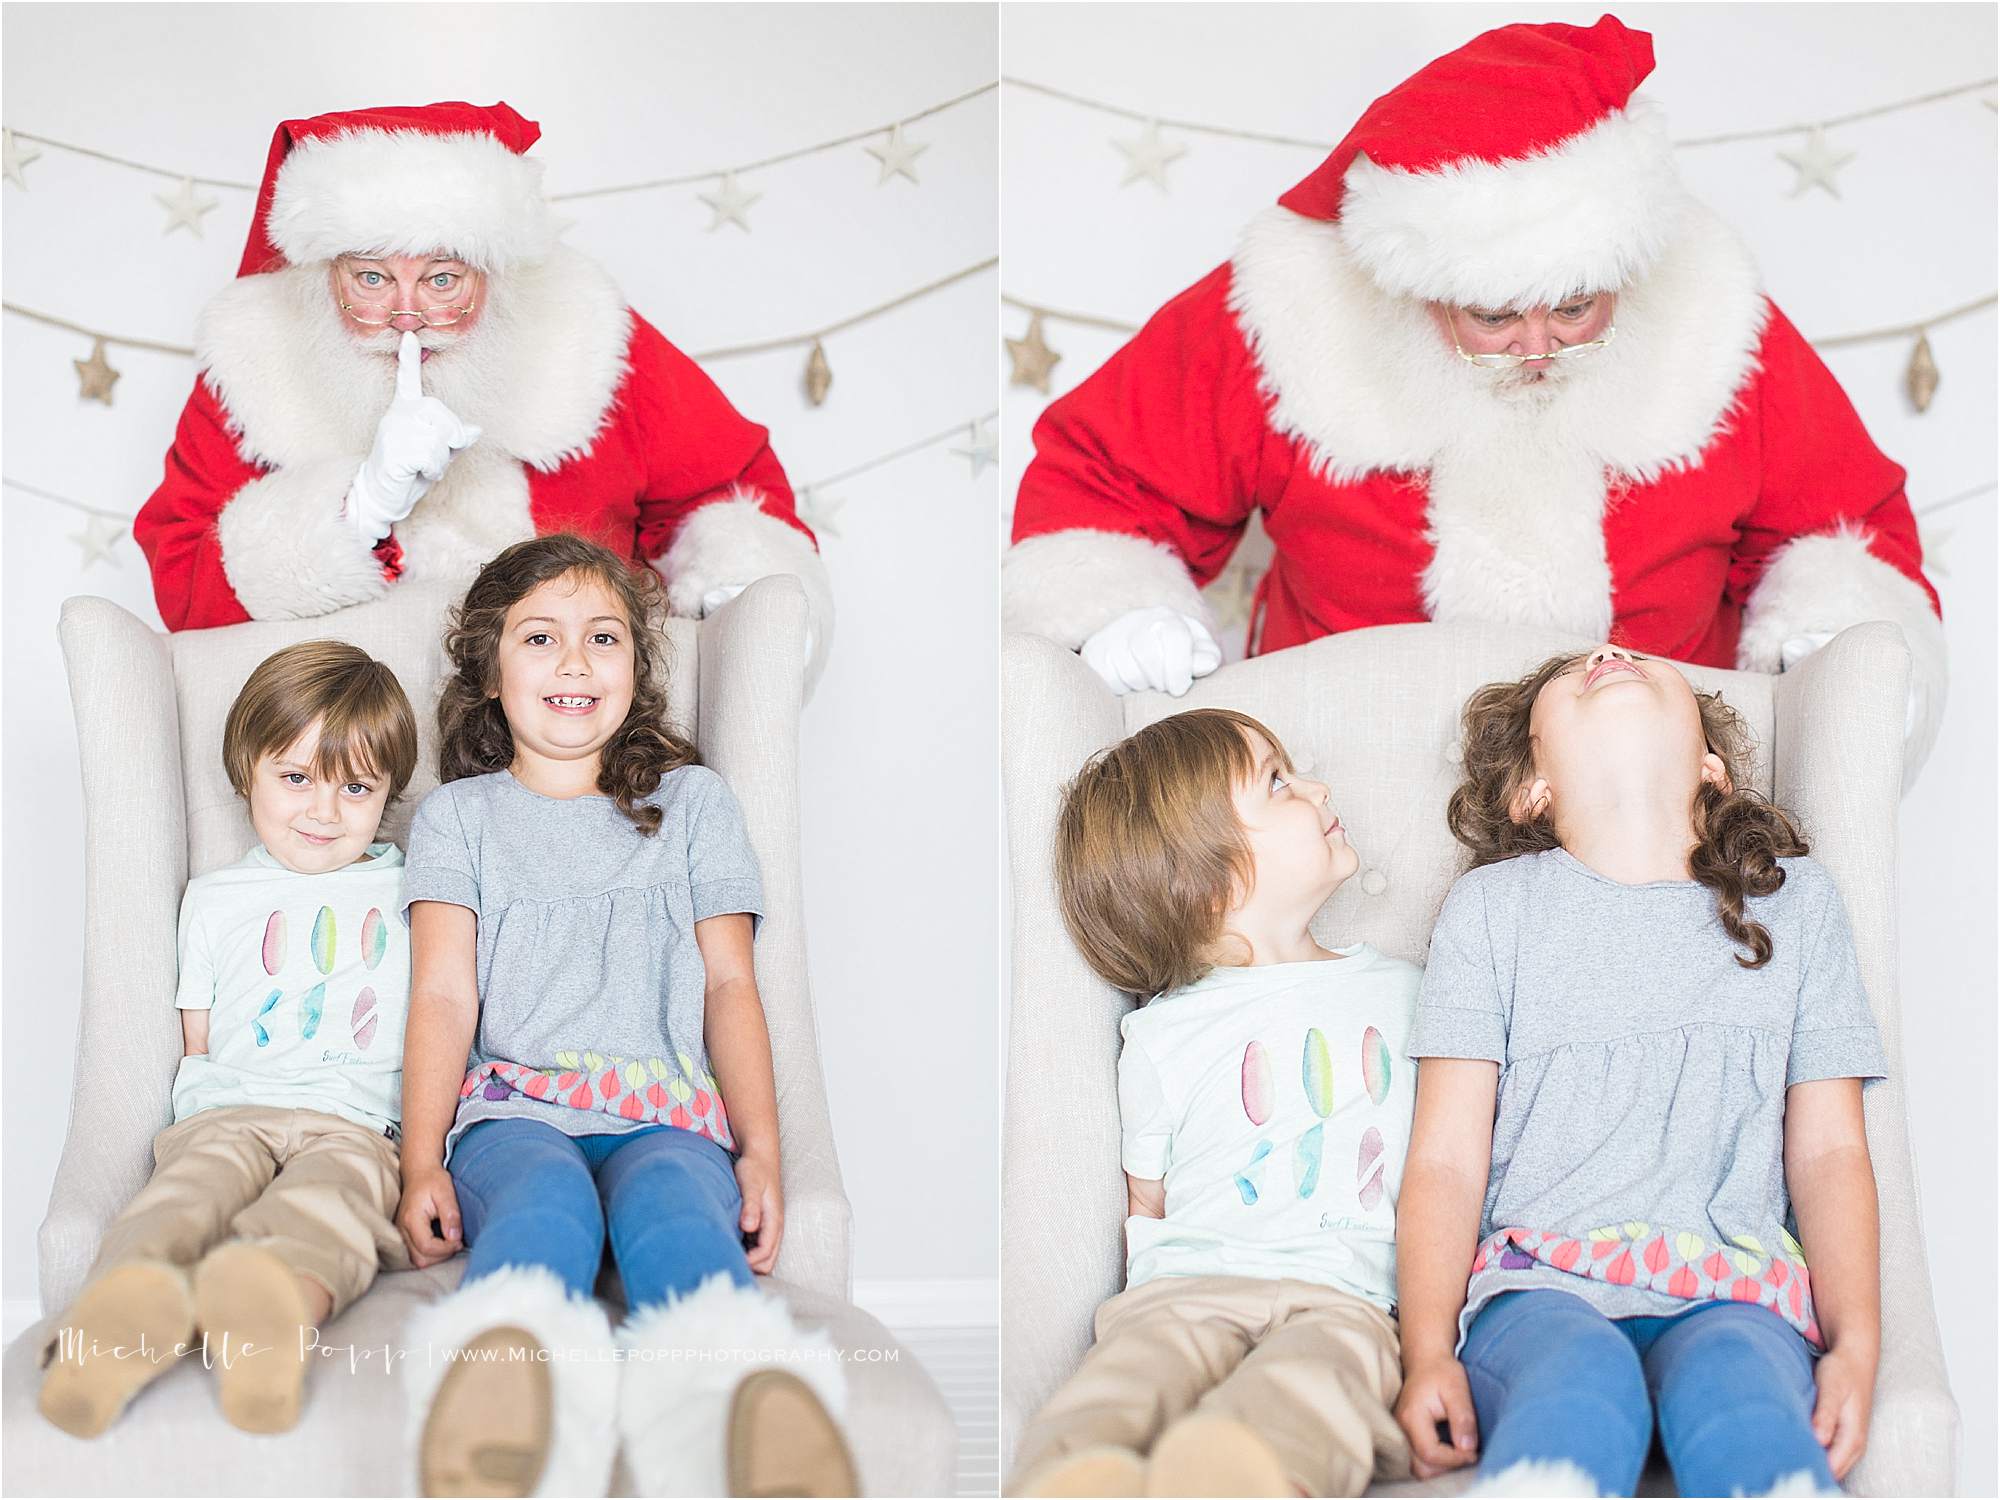 Santa sneaking up on children